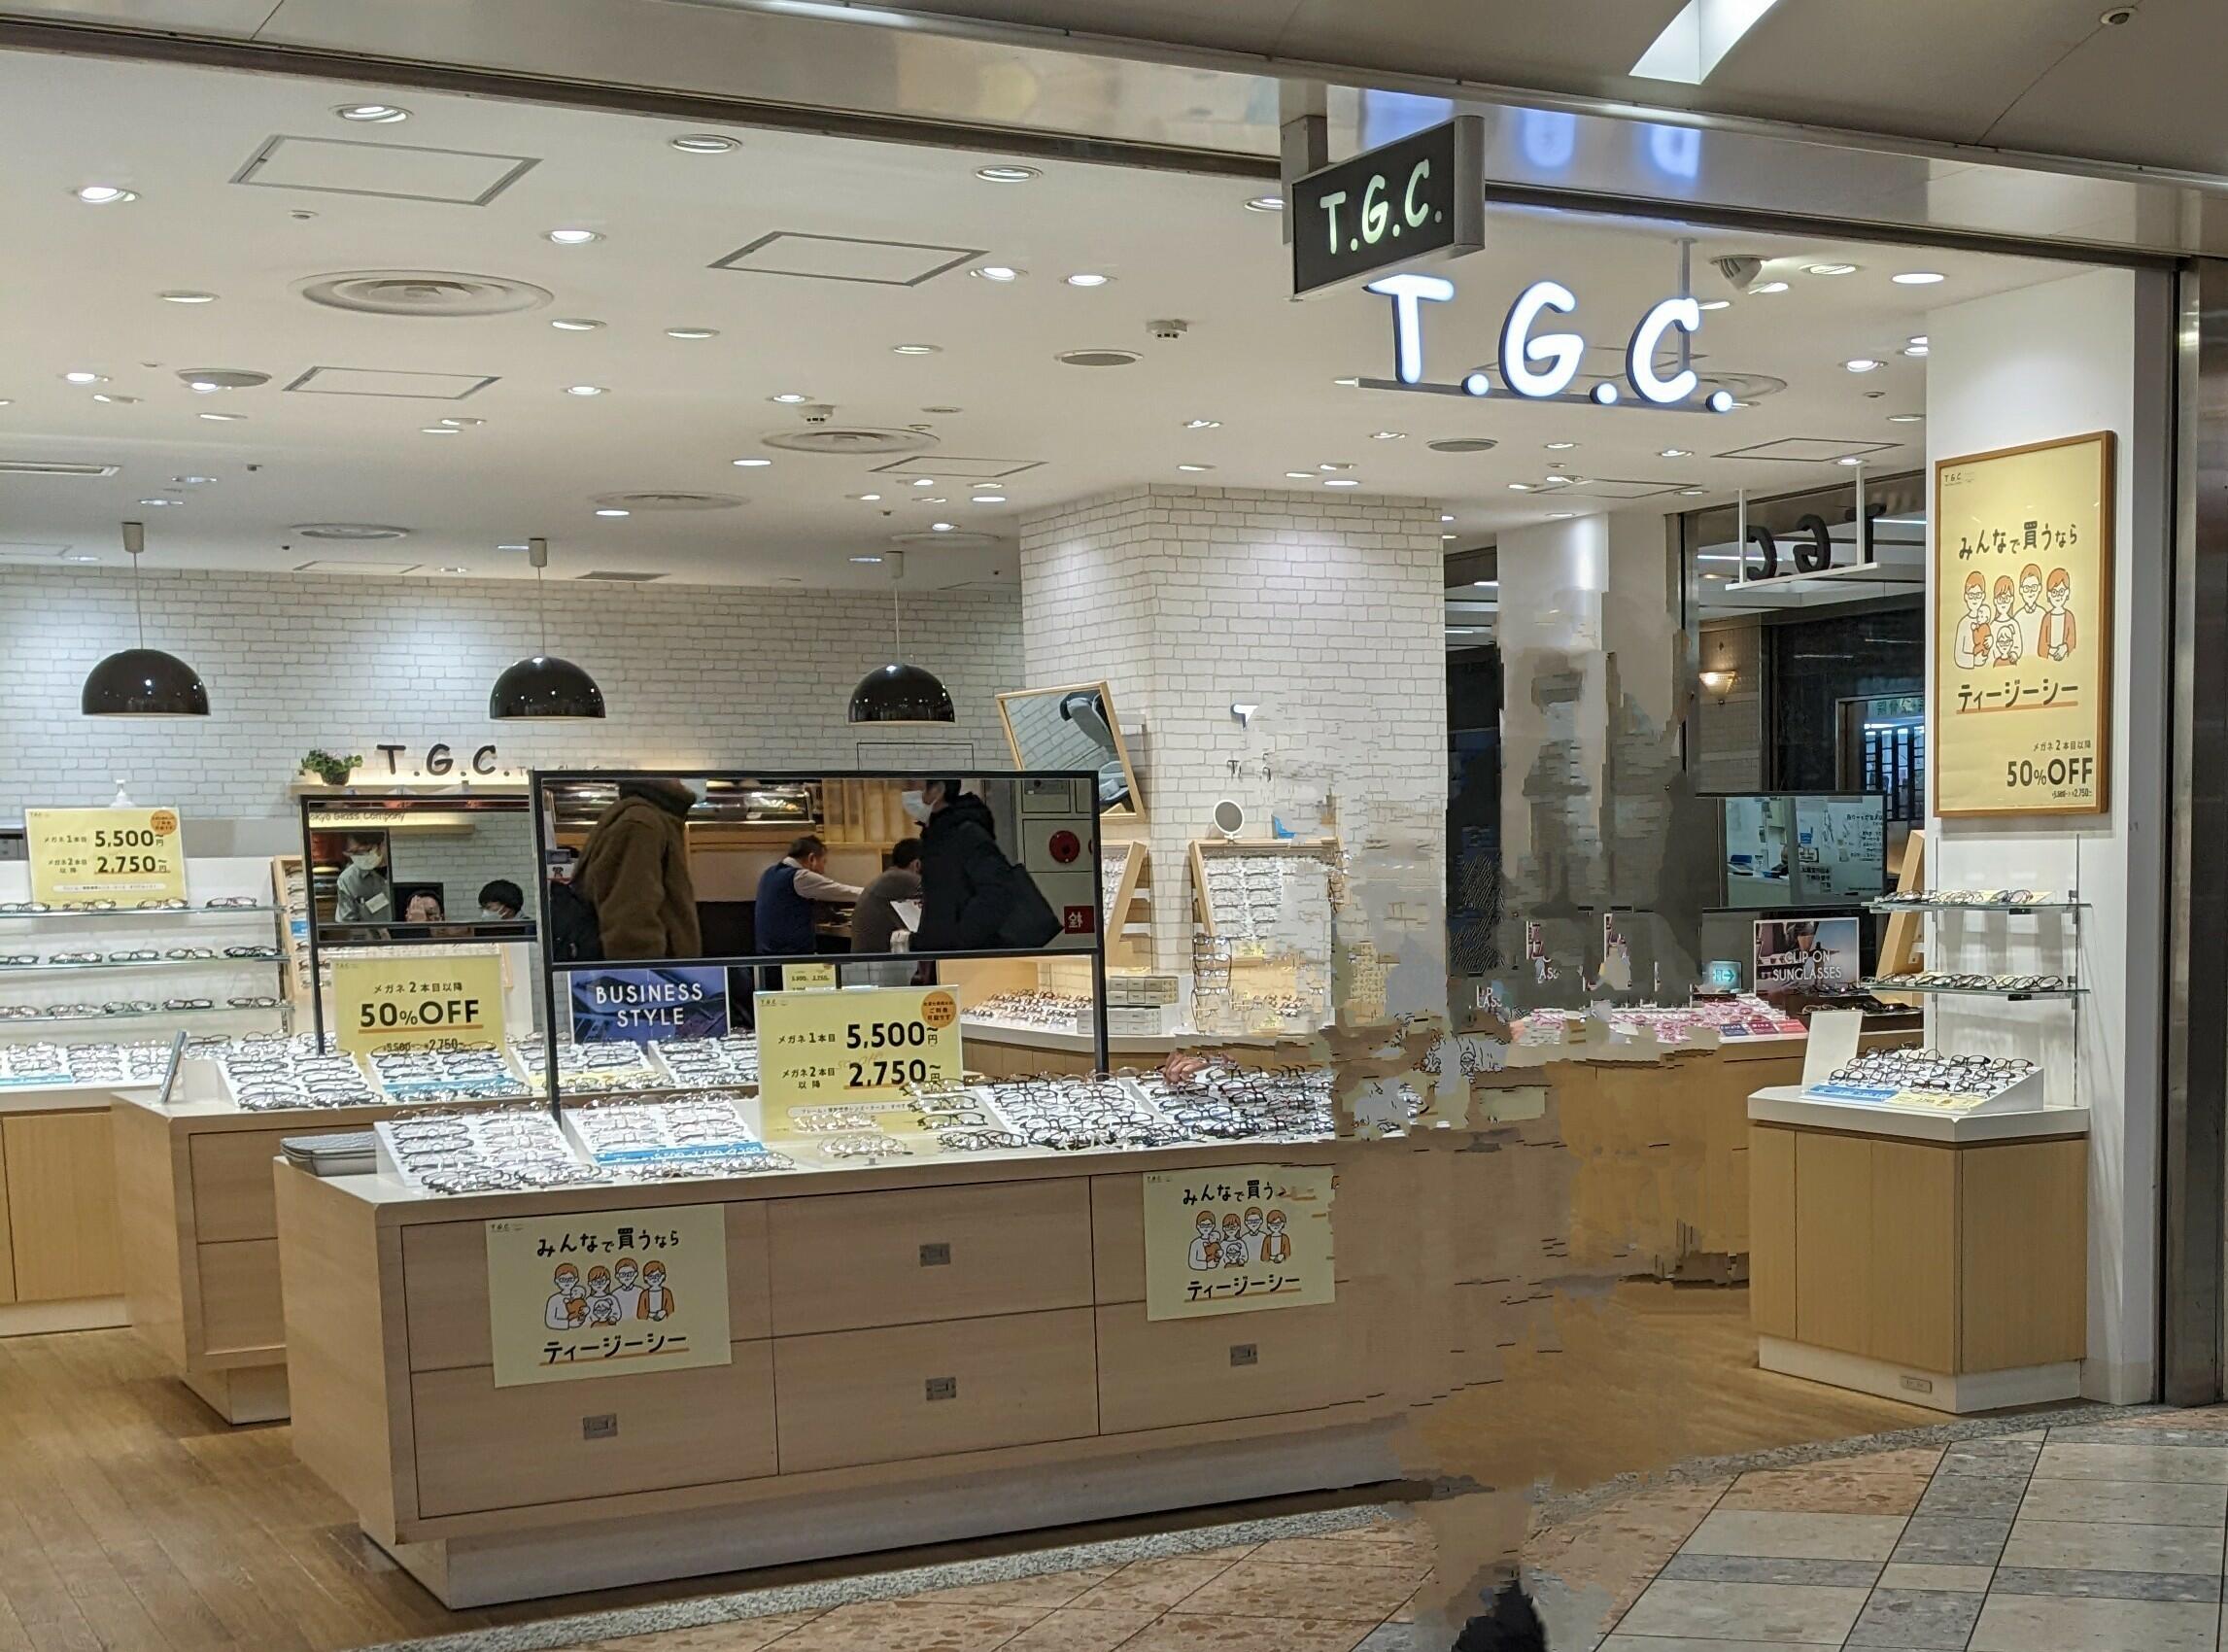 T.G.C. なんばウォーク店 - 大阪市中央区難波/メガネ店 | Yahoo!マップ